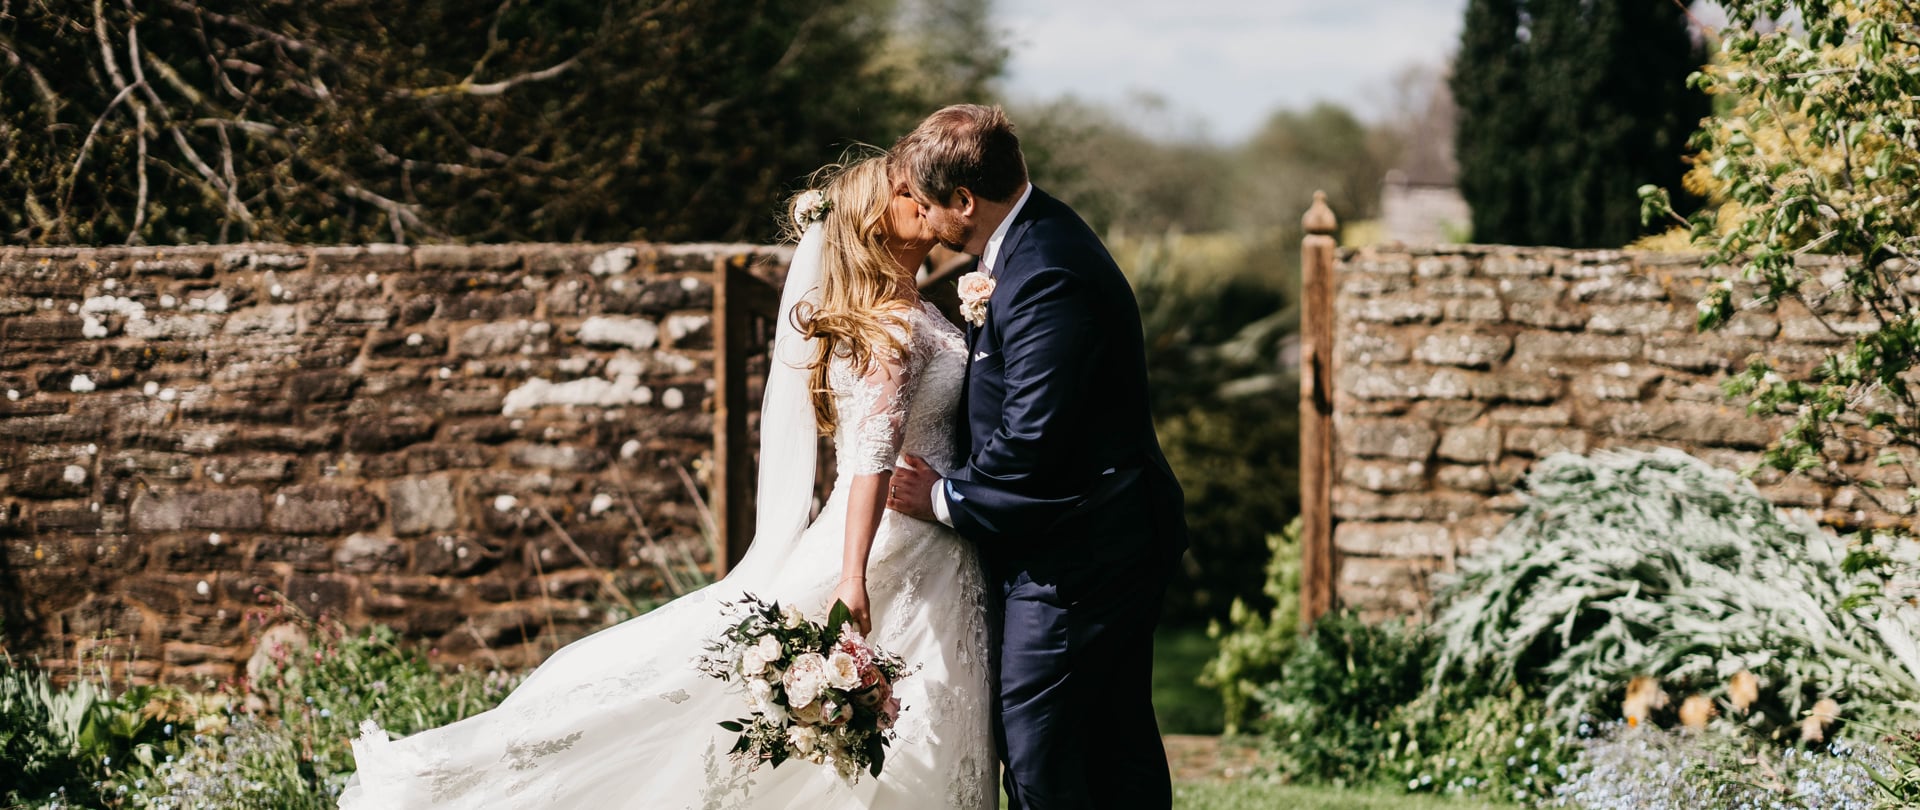 Sarah & Nick Wedding Video Filmed at Herefordshire, England